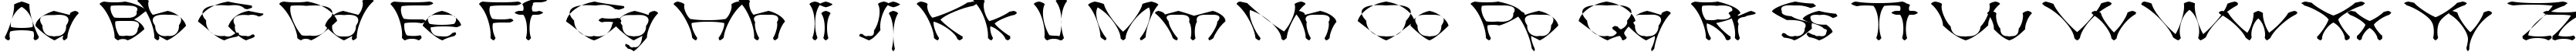 Пример написания английского алфавита шрифтом AwlScrawl